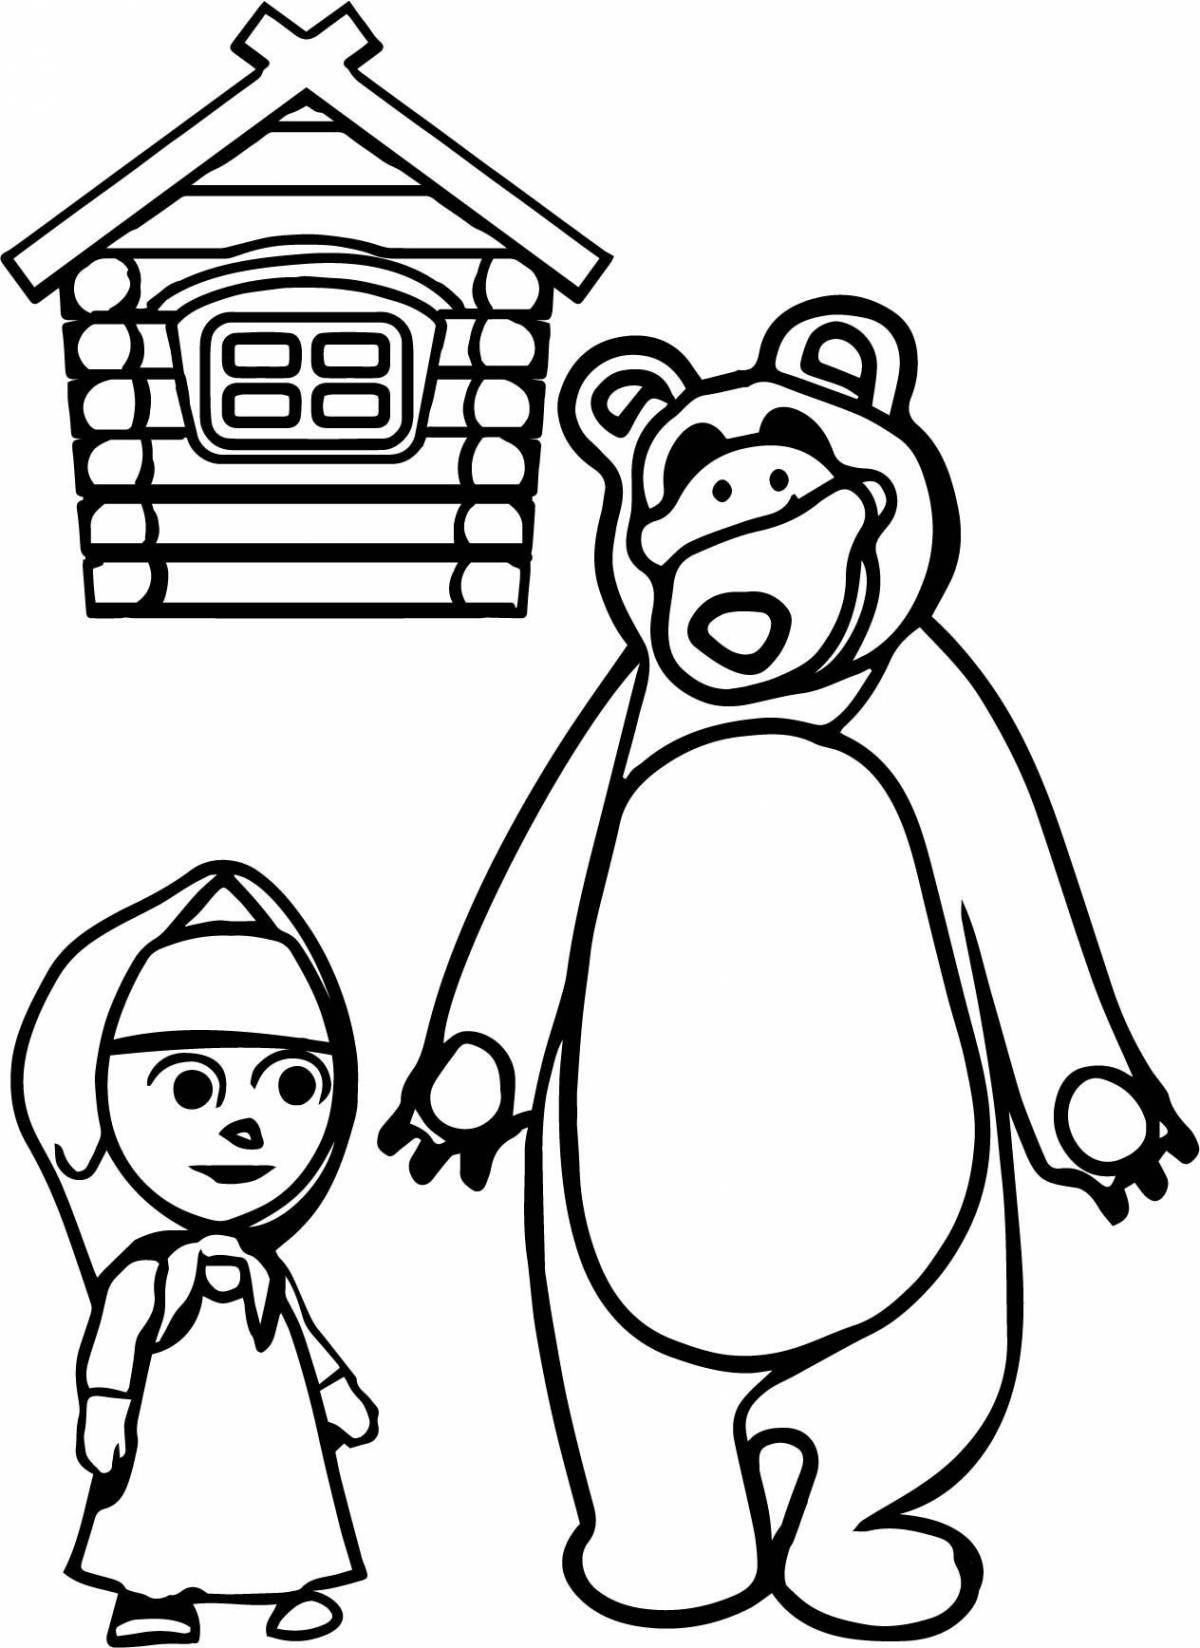 Humorous Masha and the bear super coloring book